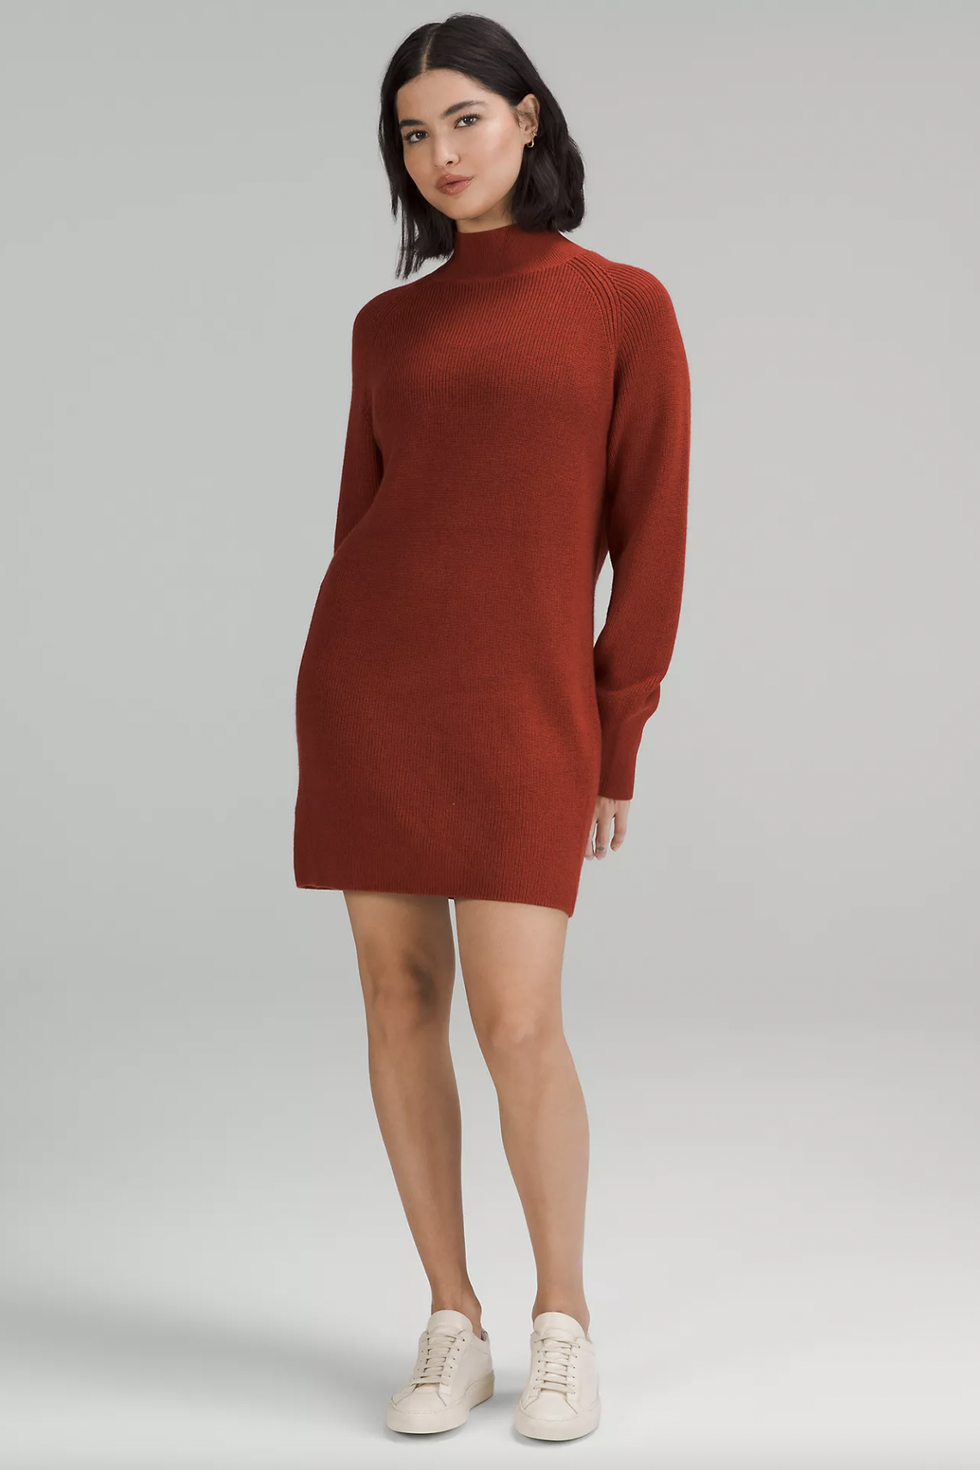 10 Best Sweater Dresses 2021, Rank & Style